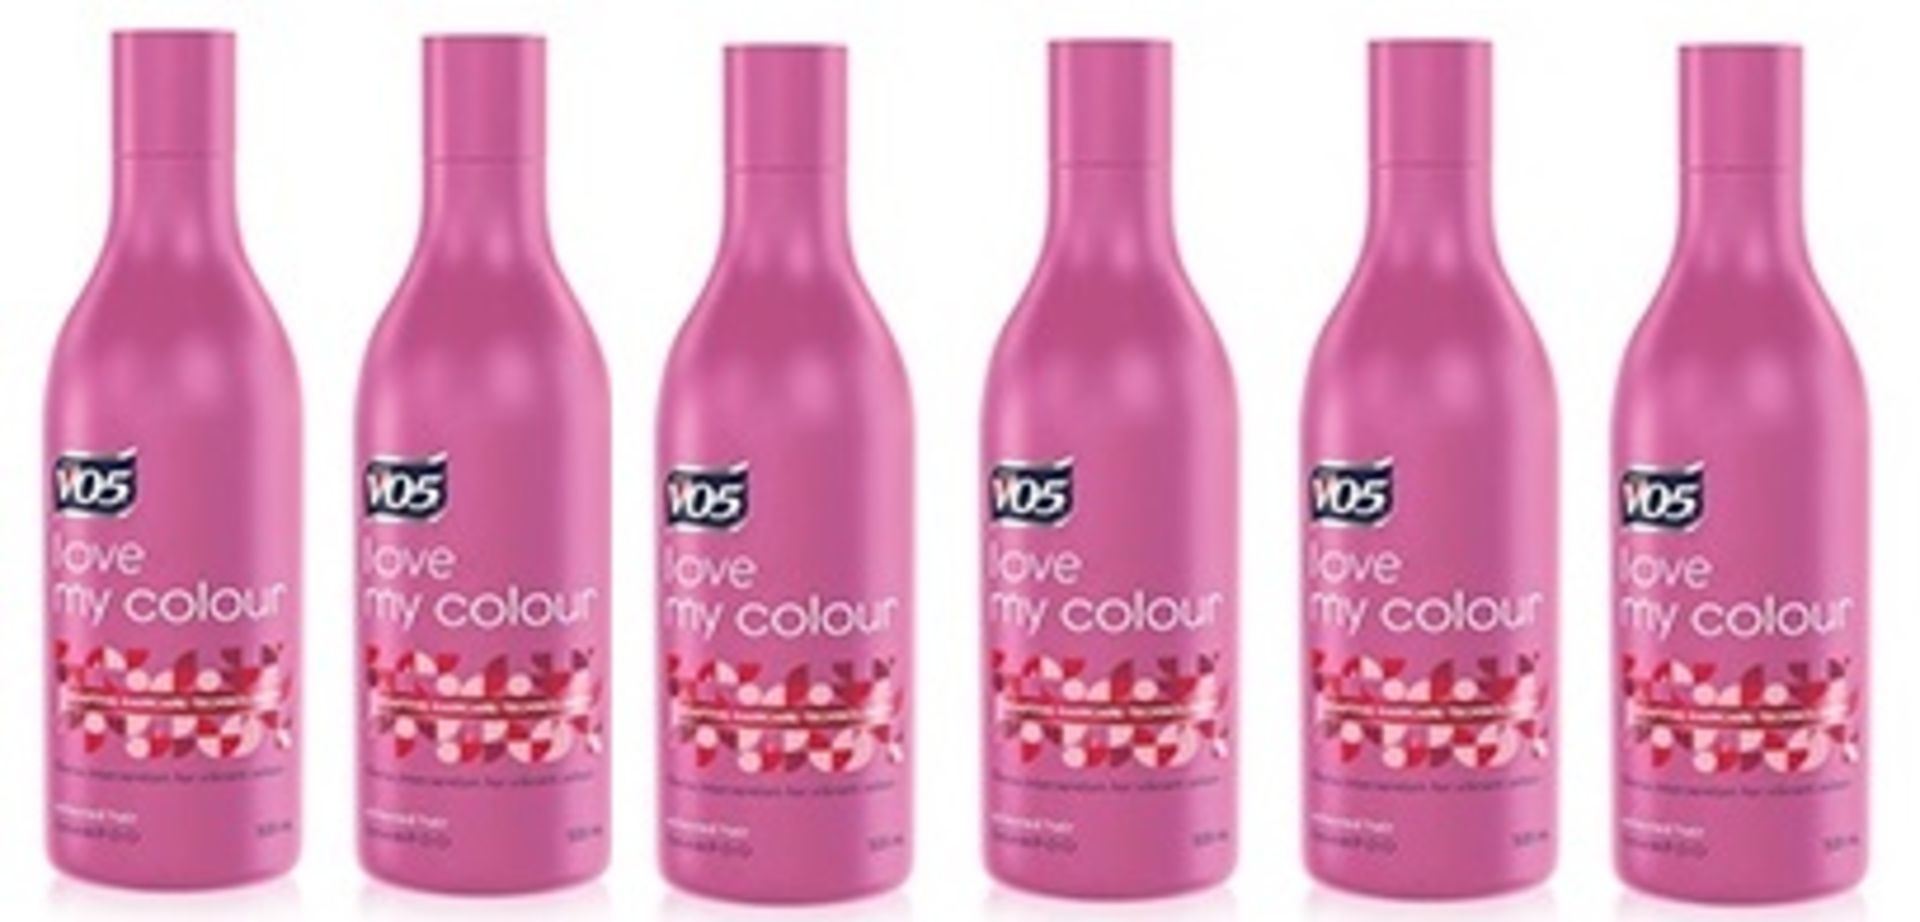 V *TRADE QTY* Grade A A Lot Of Six 500ml Bottles VO5 Love My Colour Coloured Hair Shampoo X 68